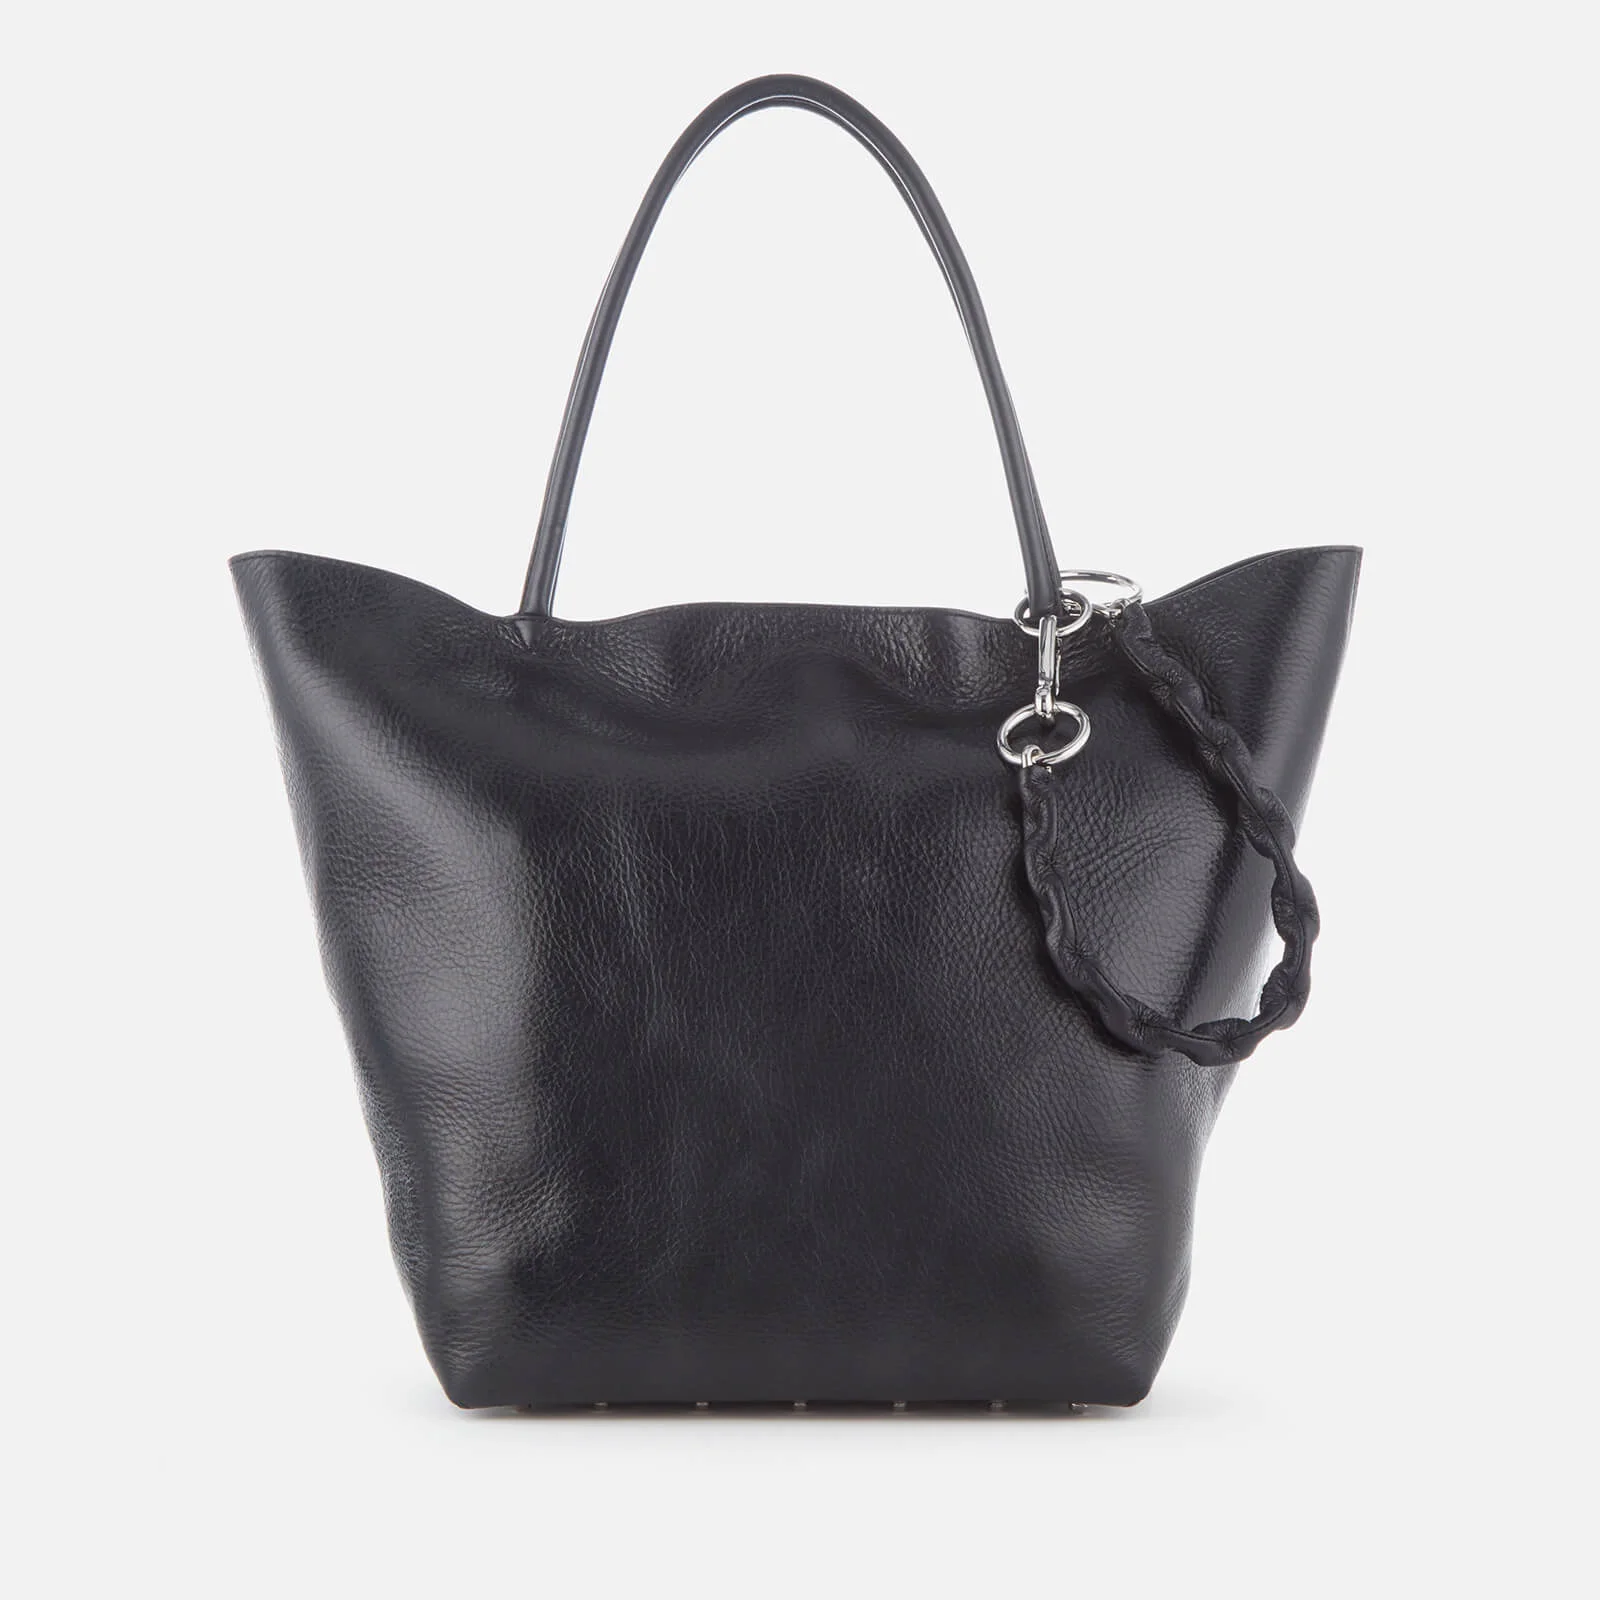 Alexander Wang Women's Roxy Soft Large Tote Bag - Black Image 1